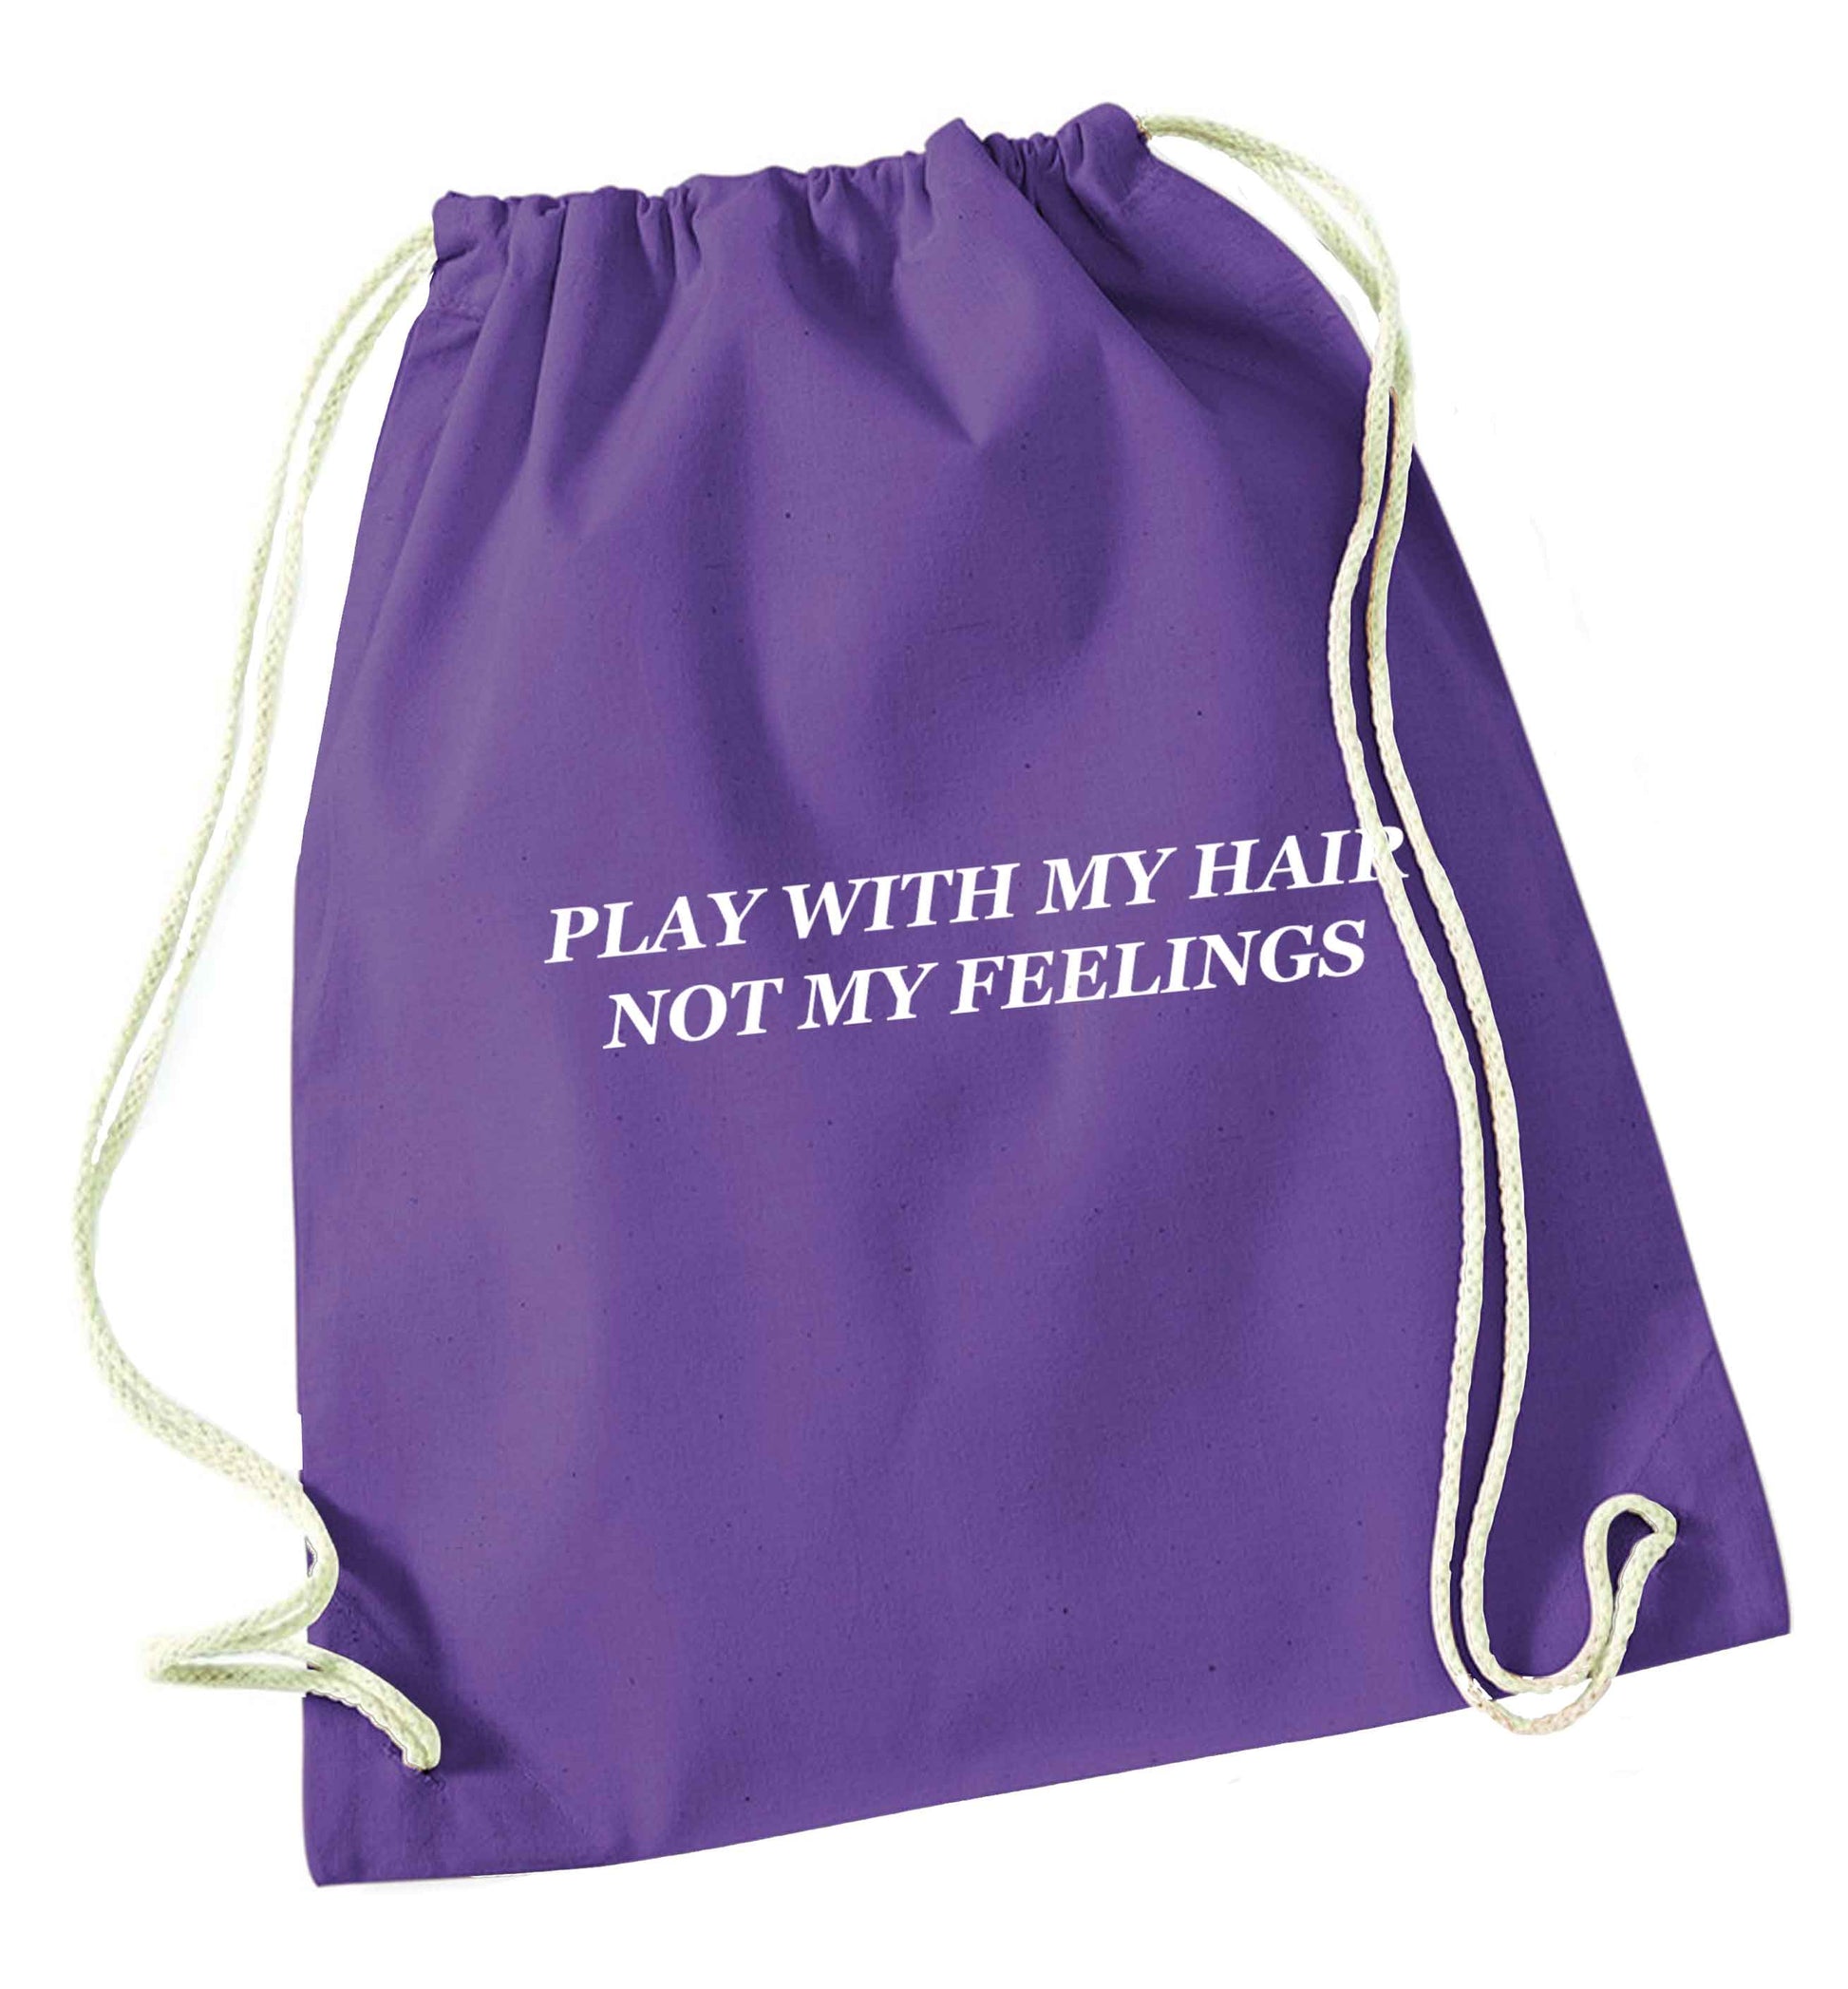 Play with my hair not my feelings purple drawstring bag